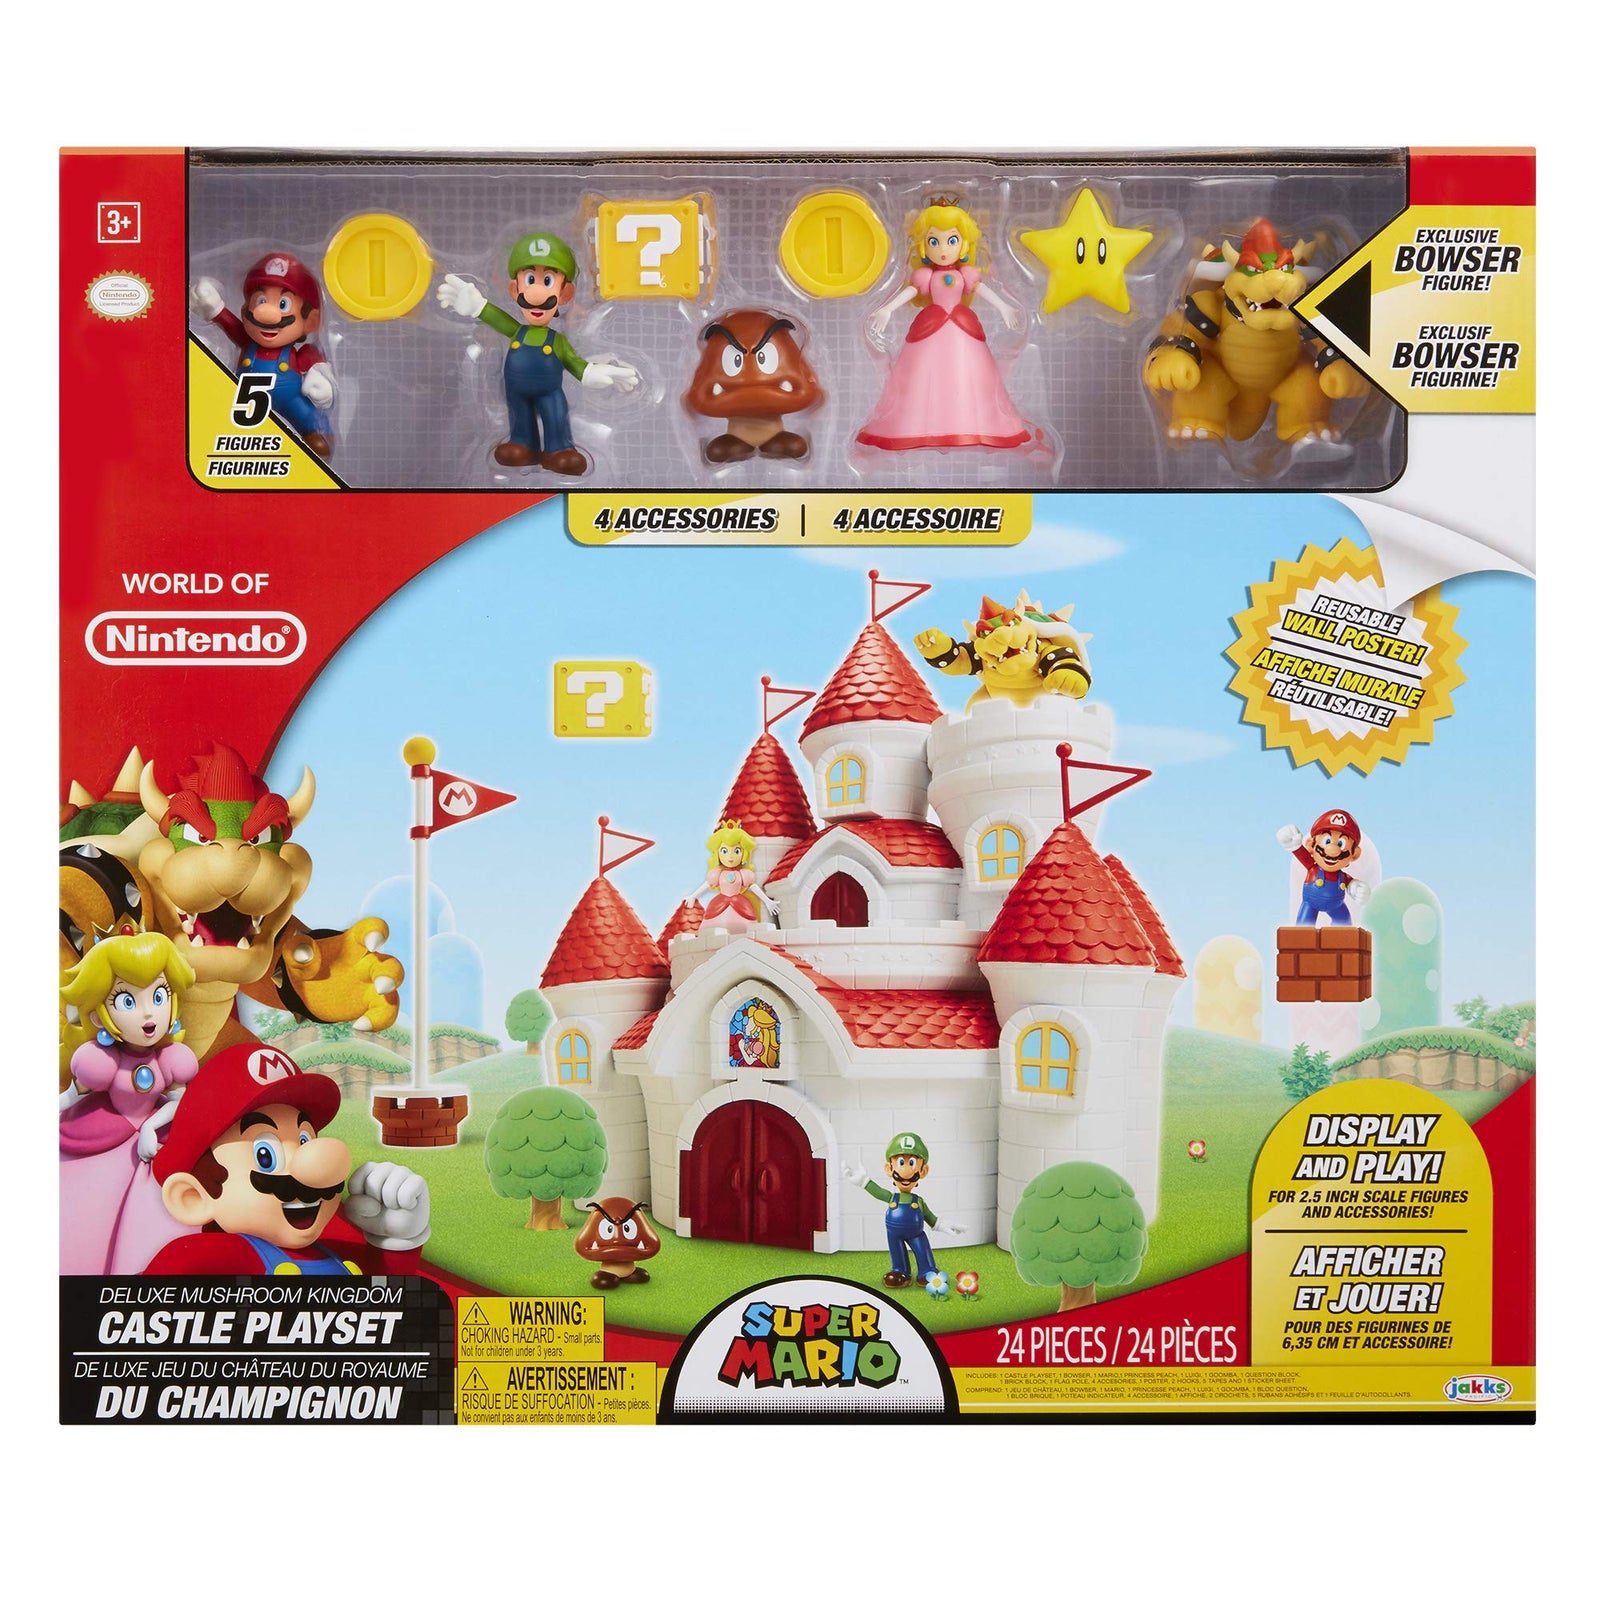 Super Mario 70843-4L Nintendo Super Mario Deluxe Mushroom Kingdom Castle Playset with 5 2.5" Articulated Action Figures & 4 Accessories (Includes Mario, Luigi, Princess Peach, Bowser)